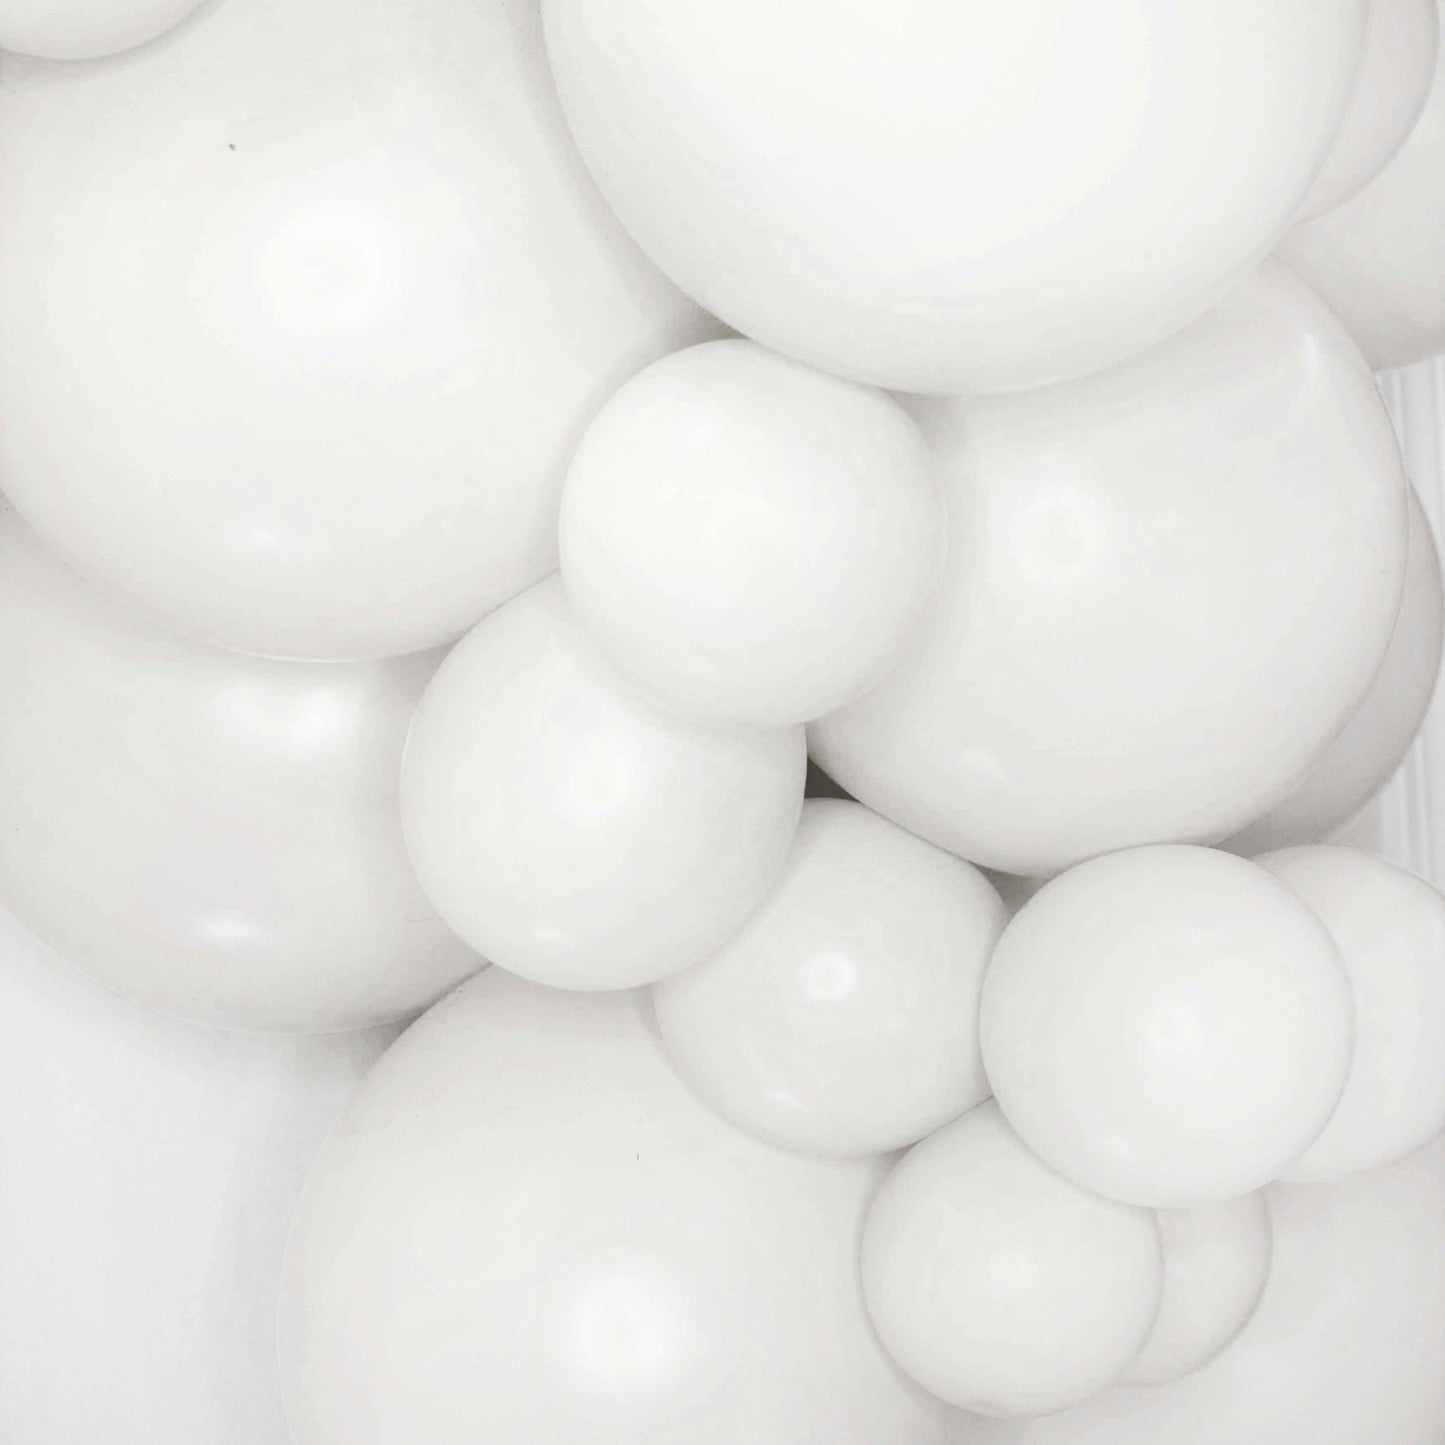 White Balloon Garland Kit (5 Feet) - Ellie's Party Supply